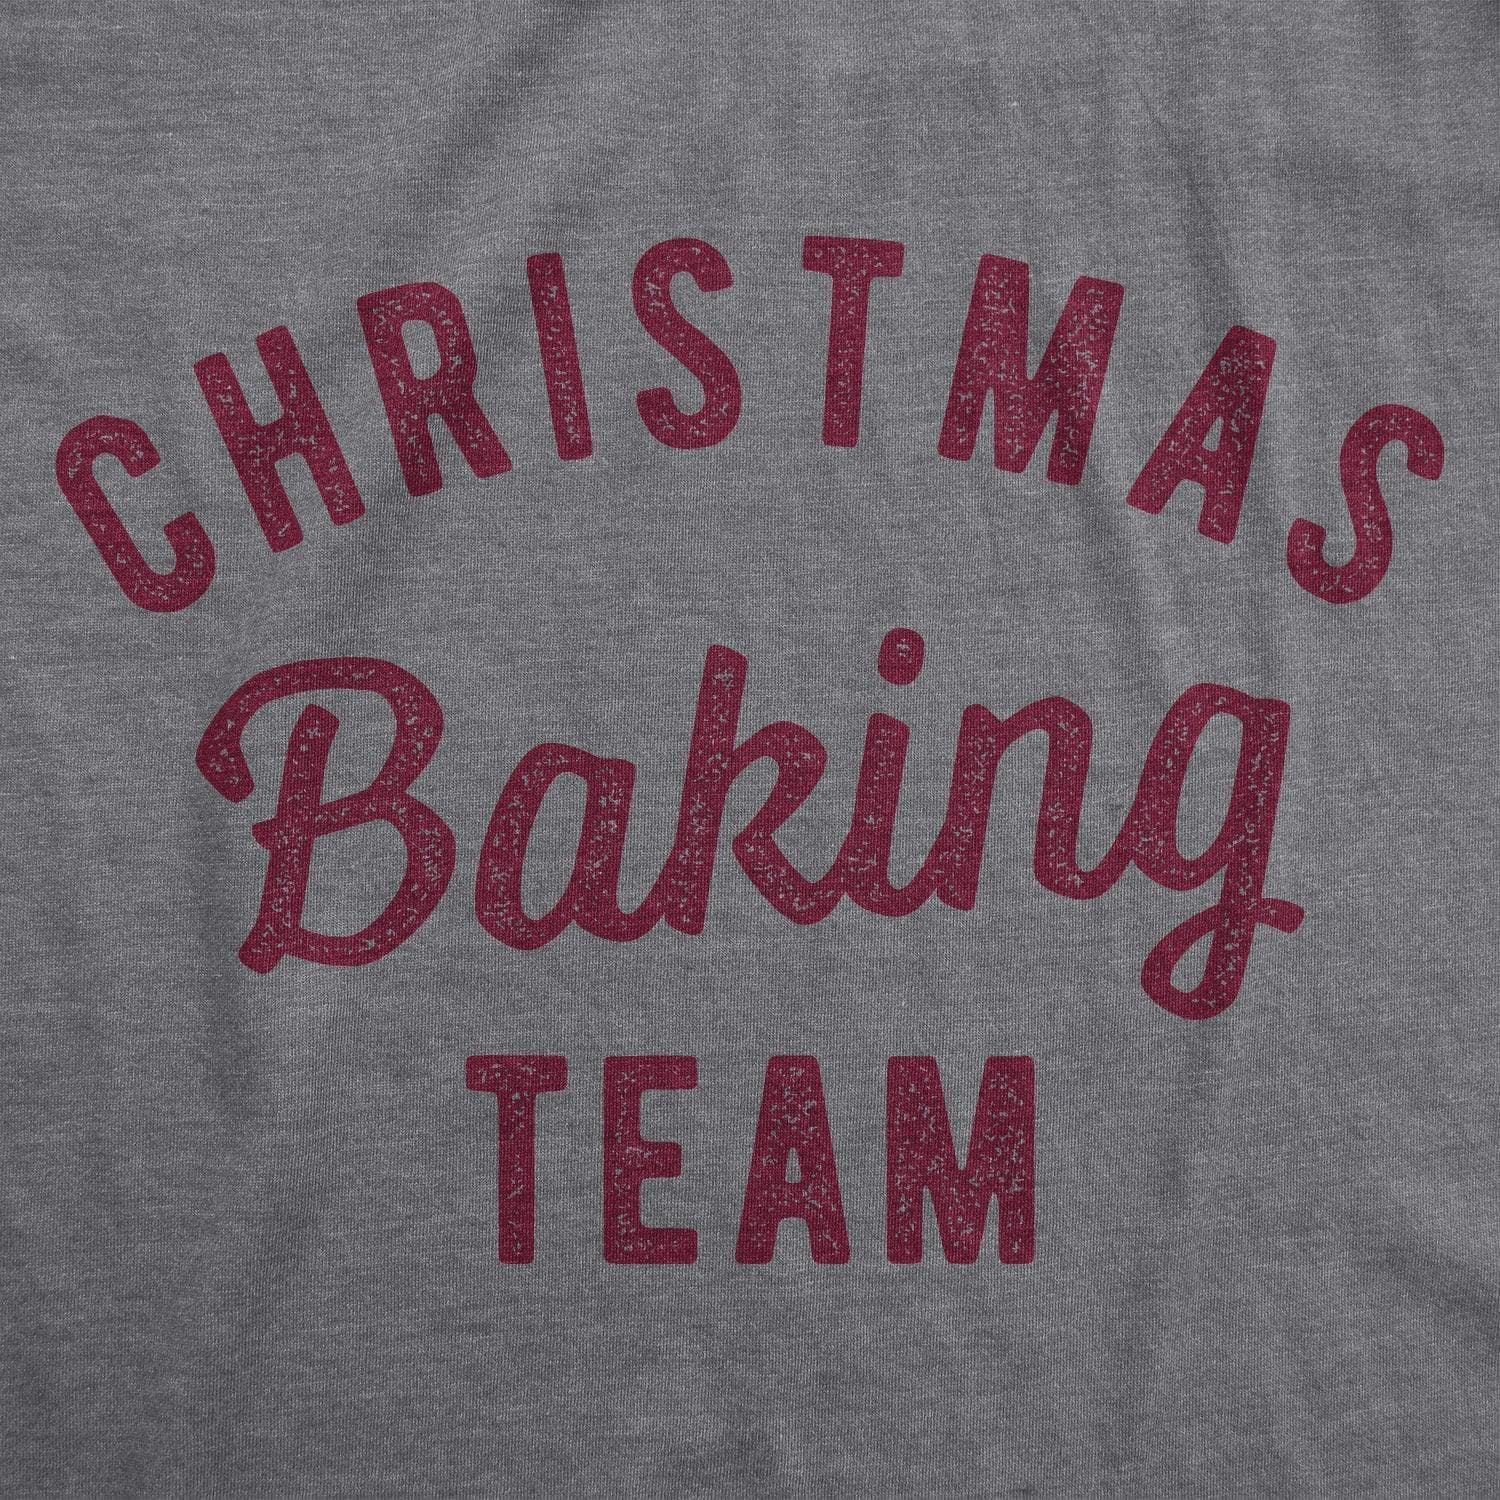 Christmas Baking Team Women's Tshirt  -  Crazy Dog T-Shirts